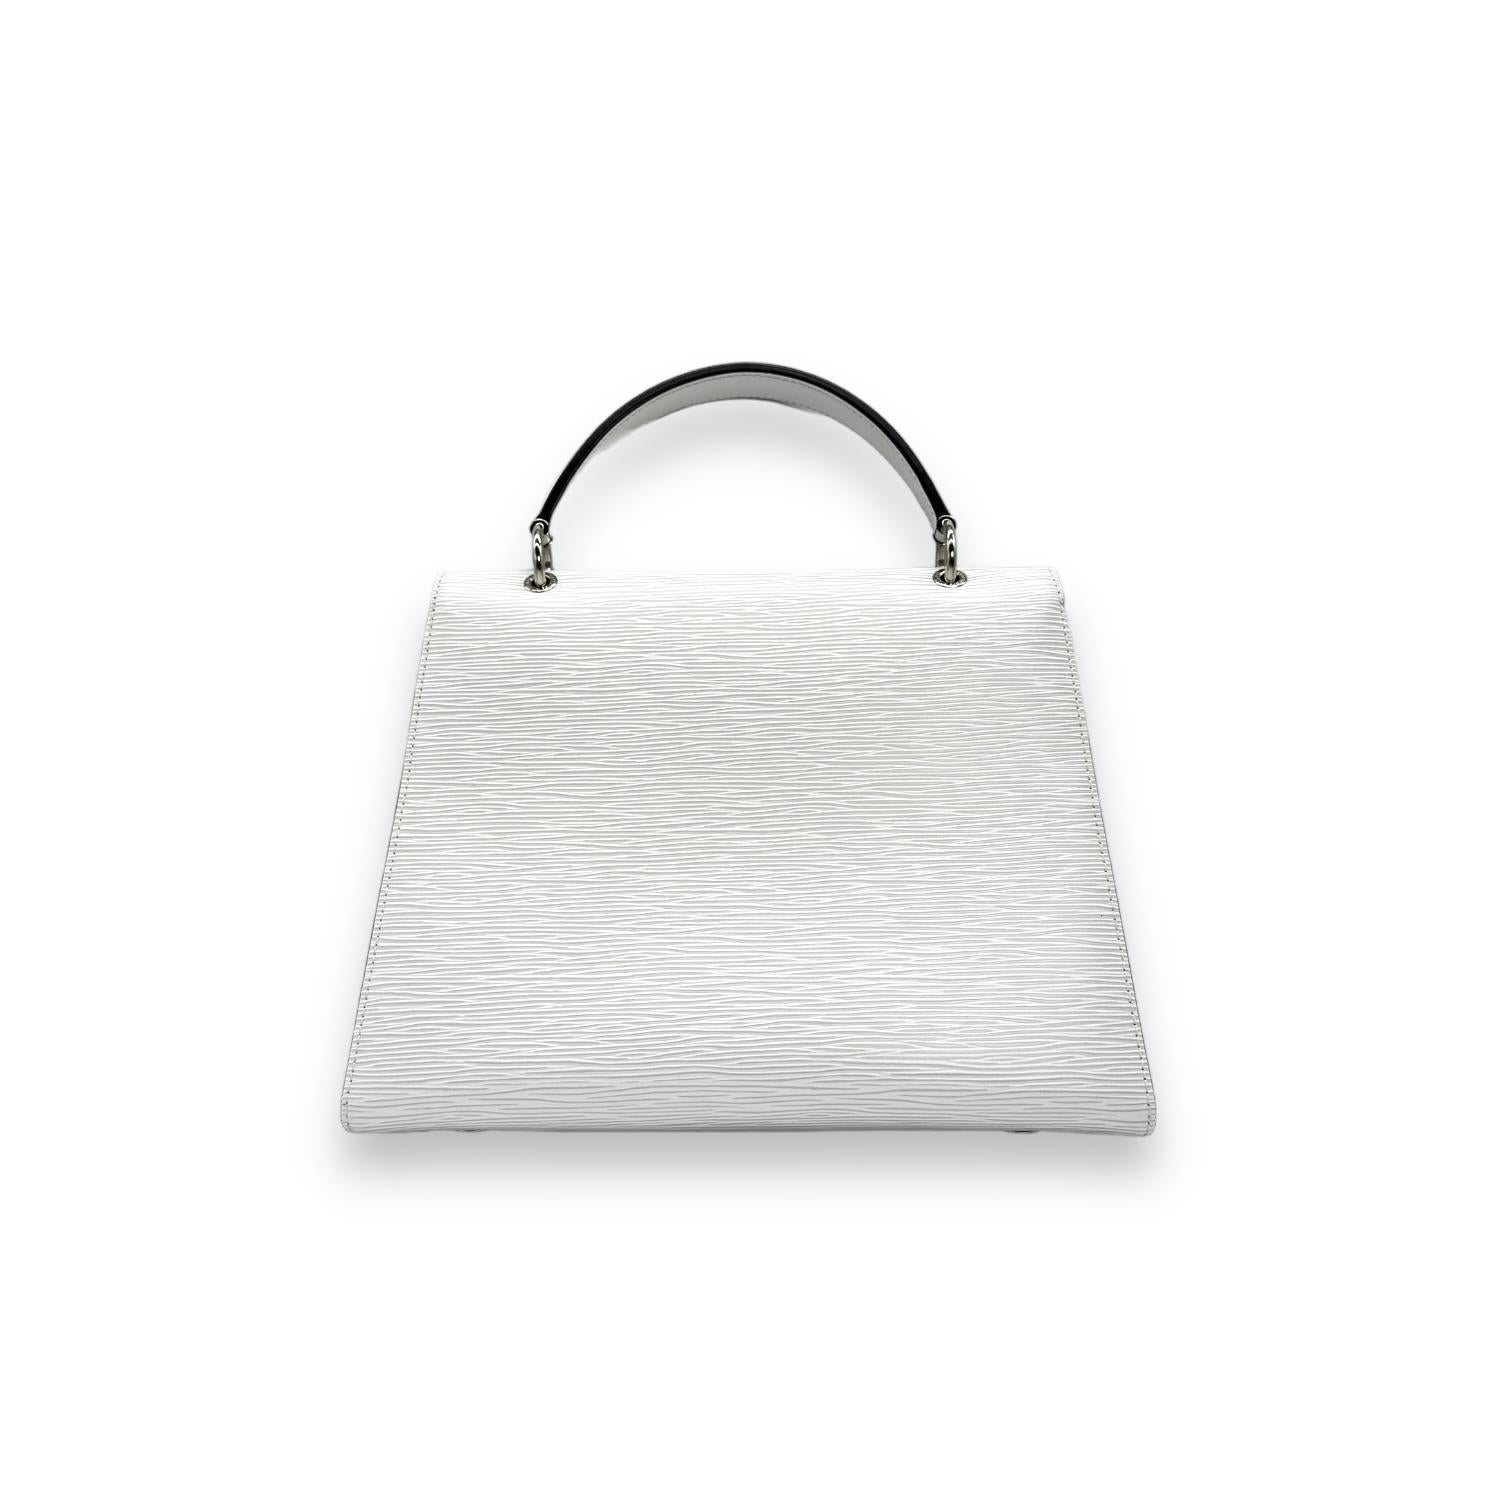 Louis Vuitton White Epi Grenelle MM Handbag In Excellent Condition For Sale In Scottsdale, AZ